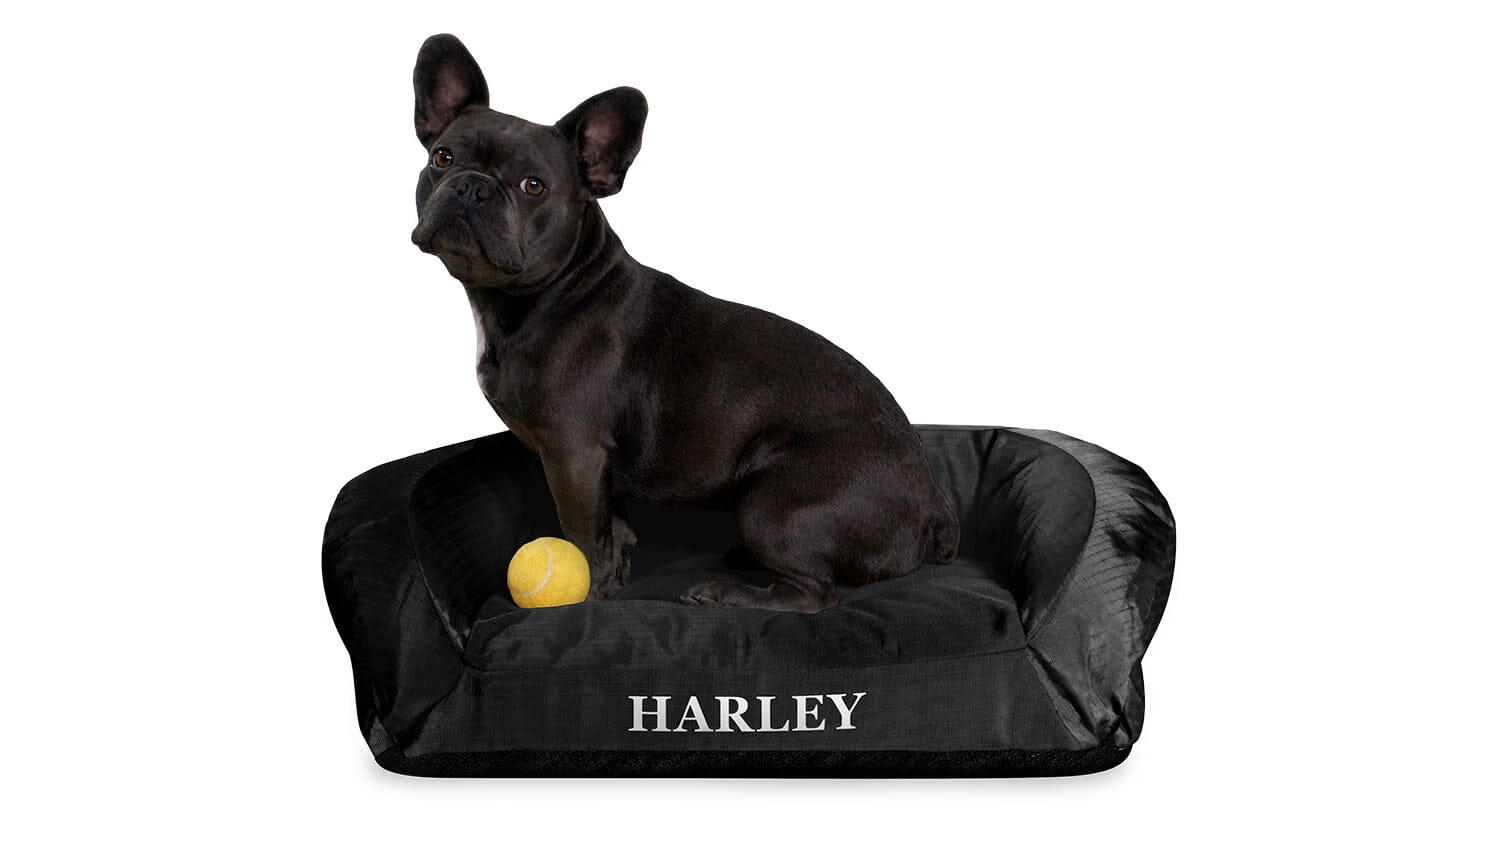 Harley davidson dog leashes -  France